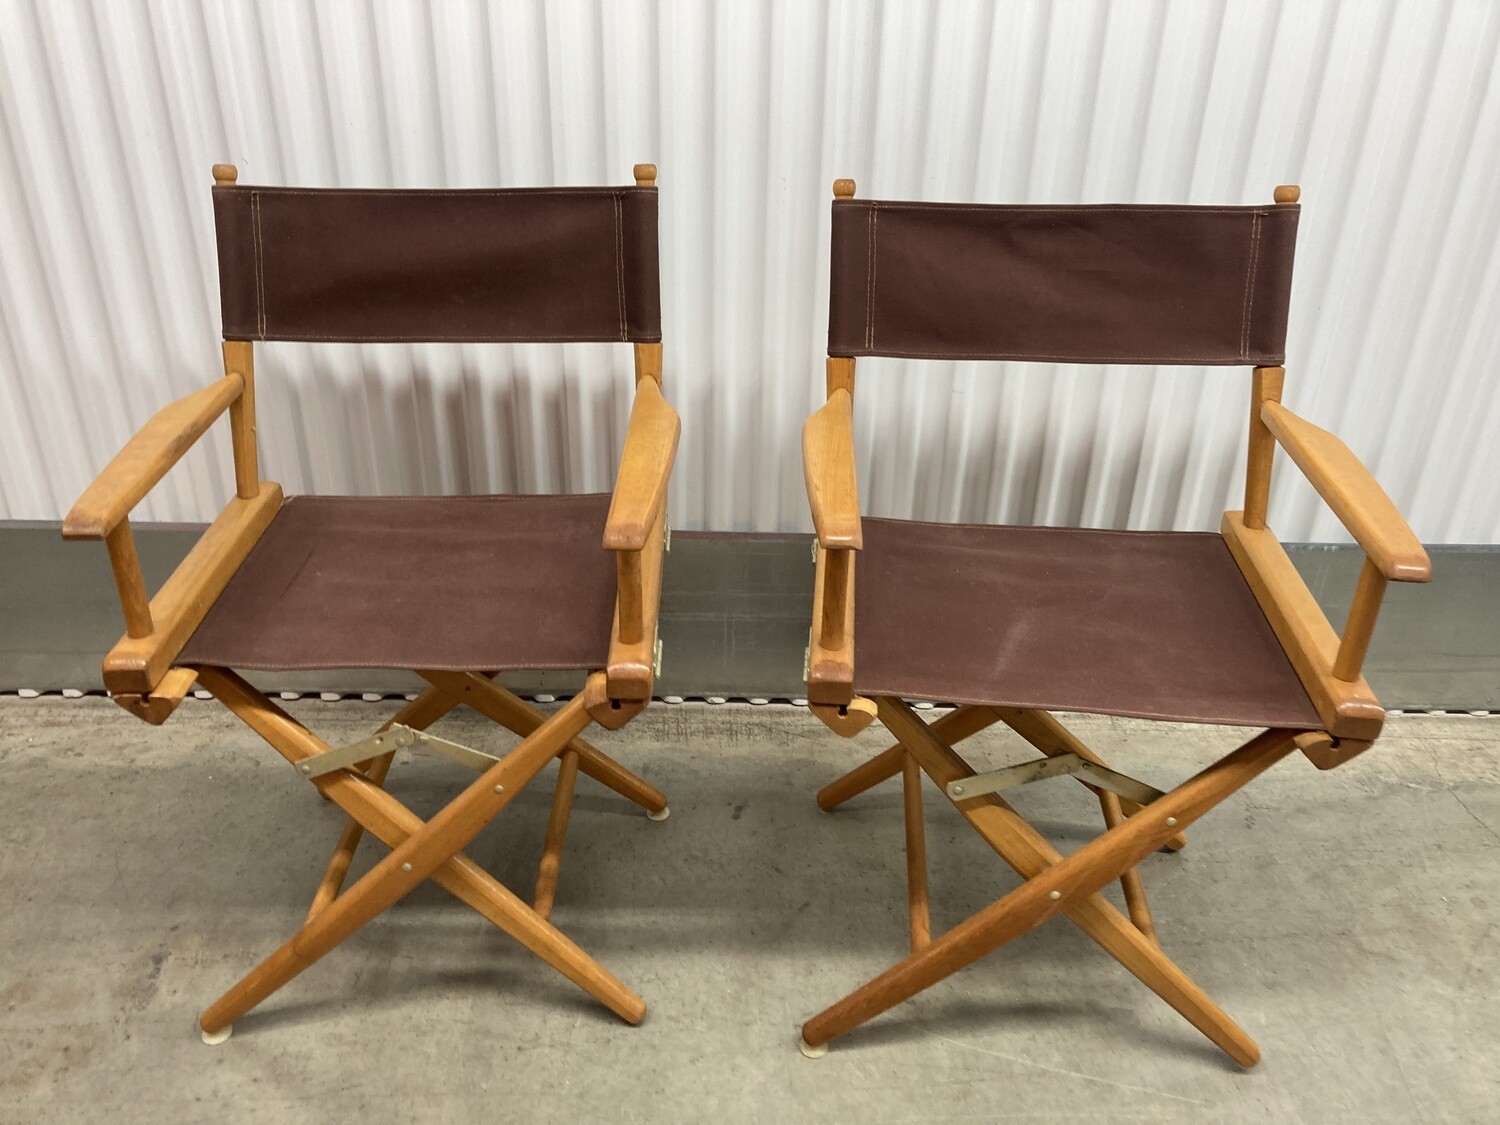 Matching Director's Chairs, DIY alert #2114